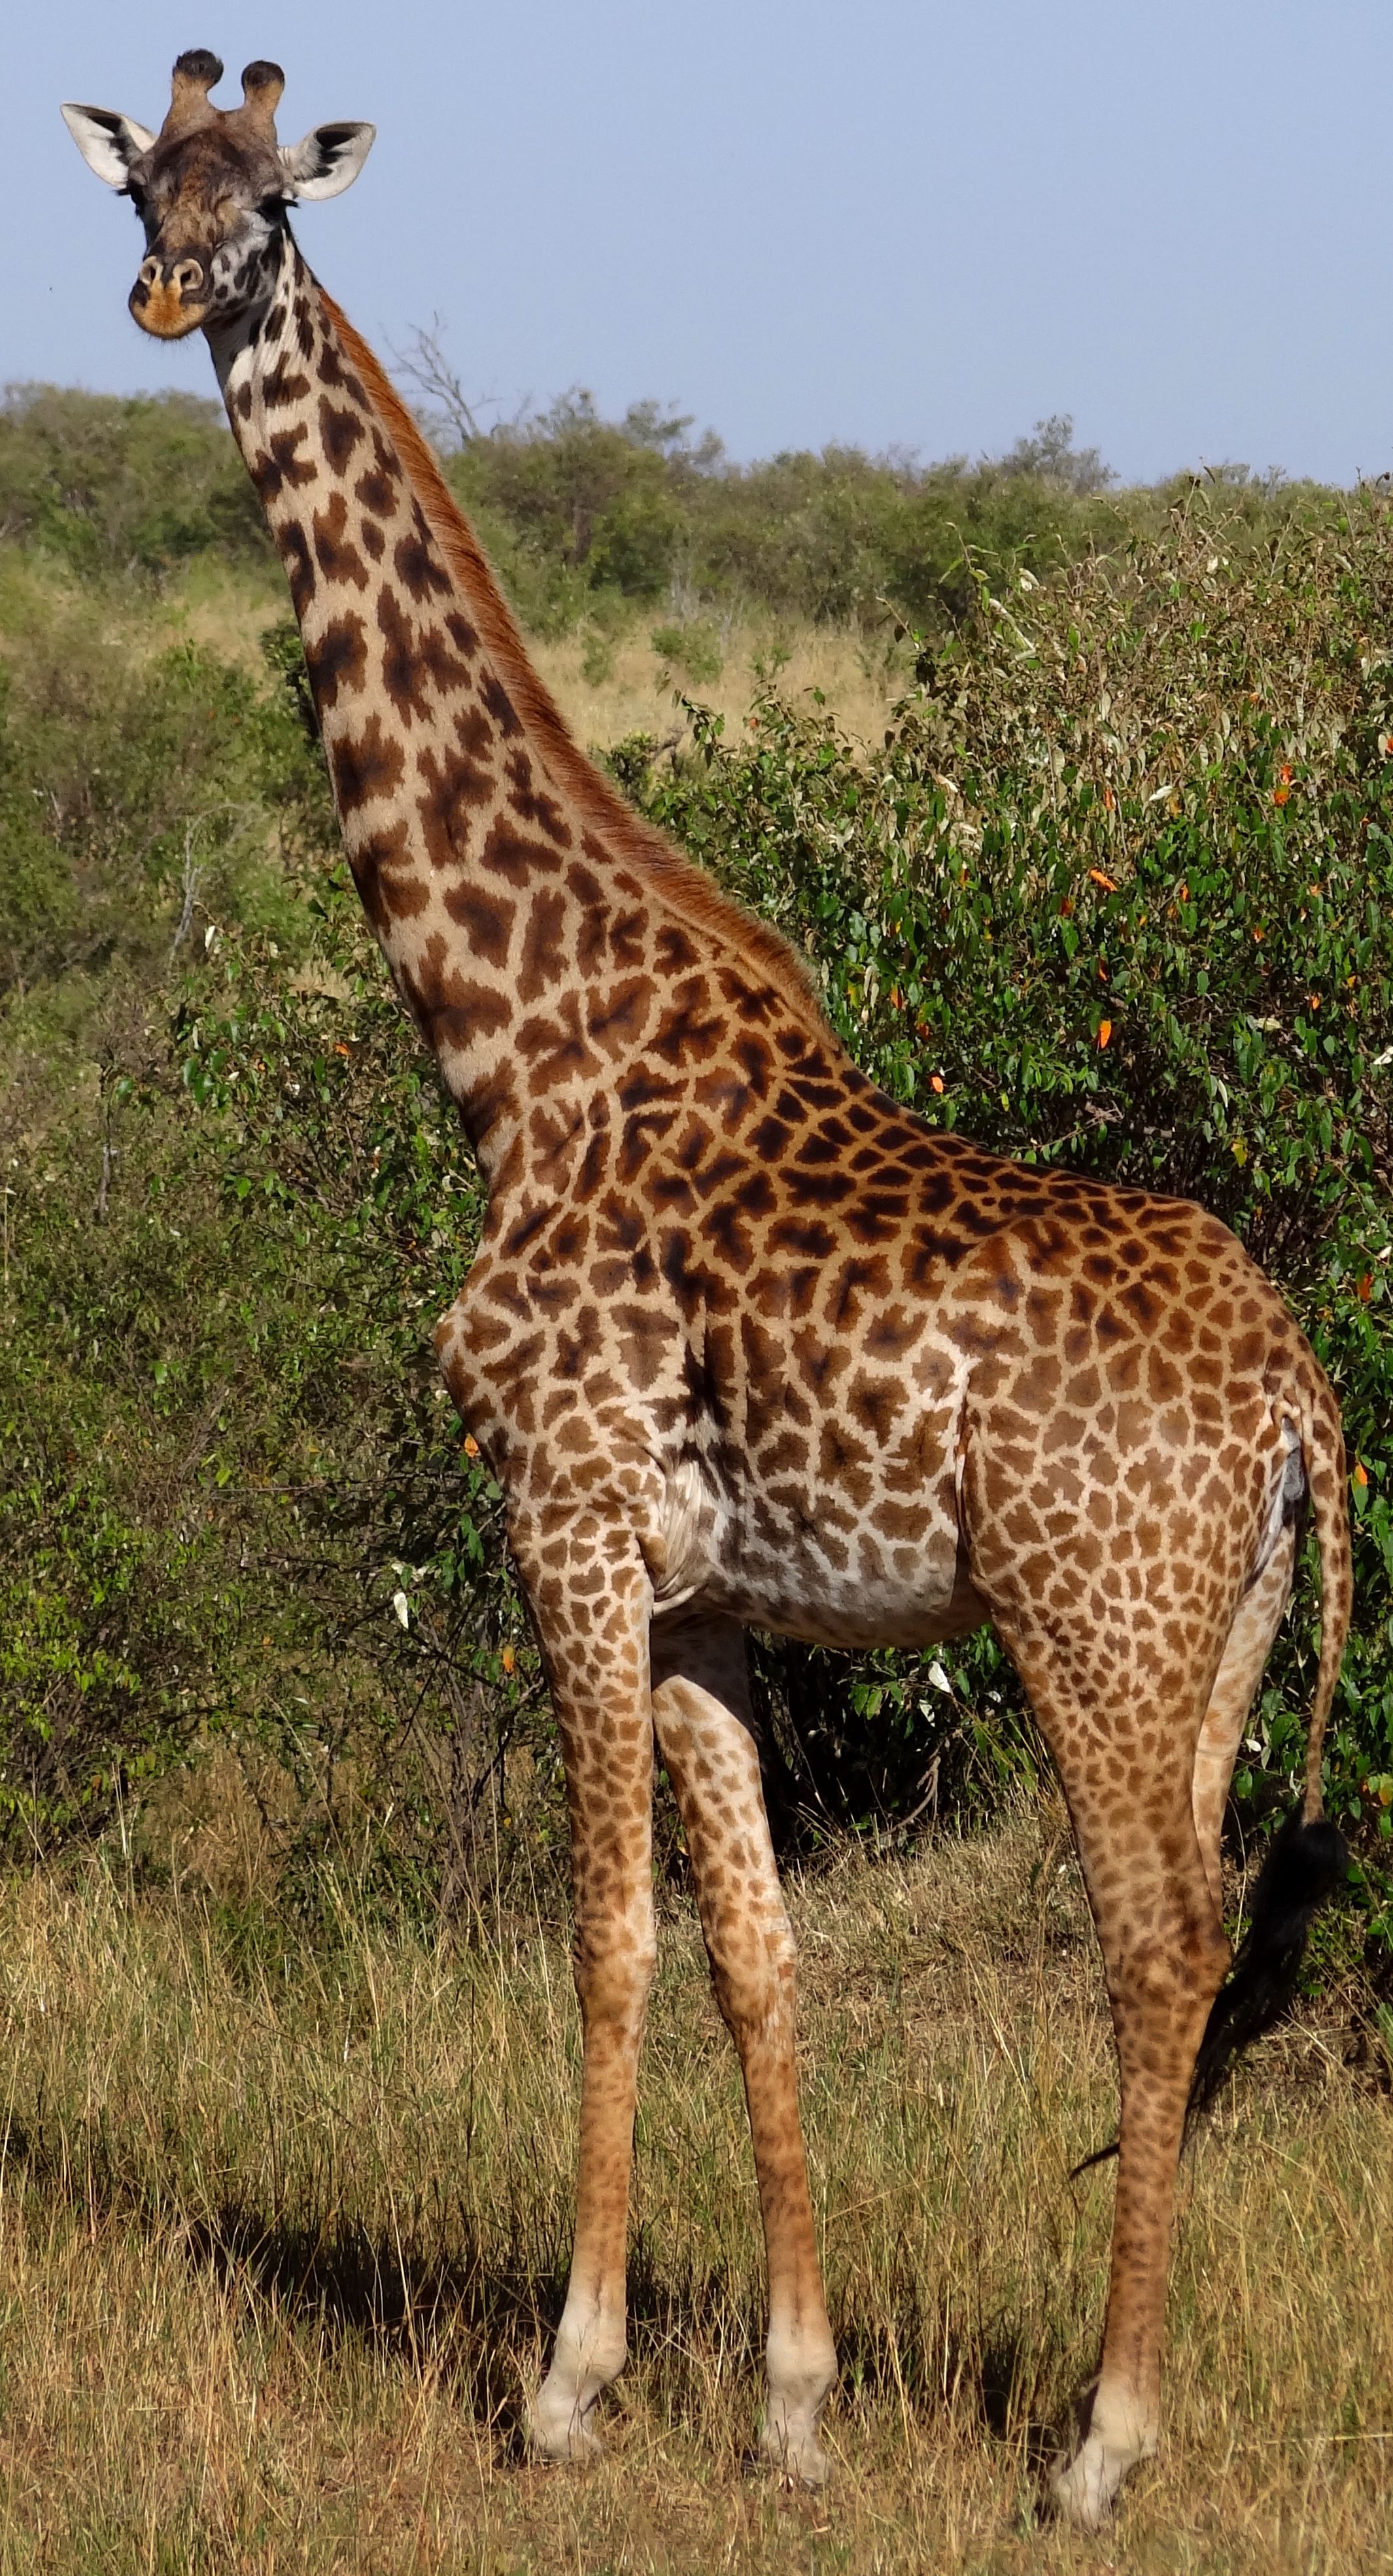 An adult female Masai giraffe in the Masaai Mara National Park, Kenya. Photo taken on August 22, 2012.